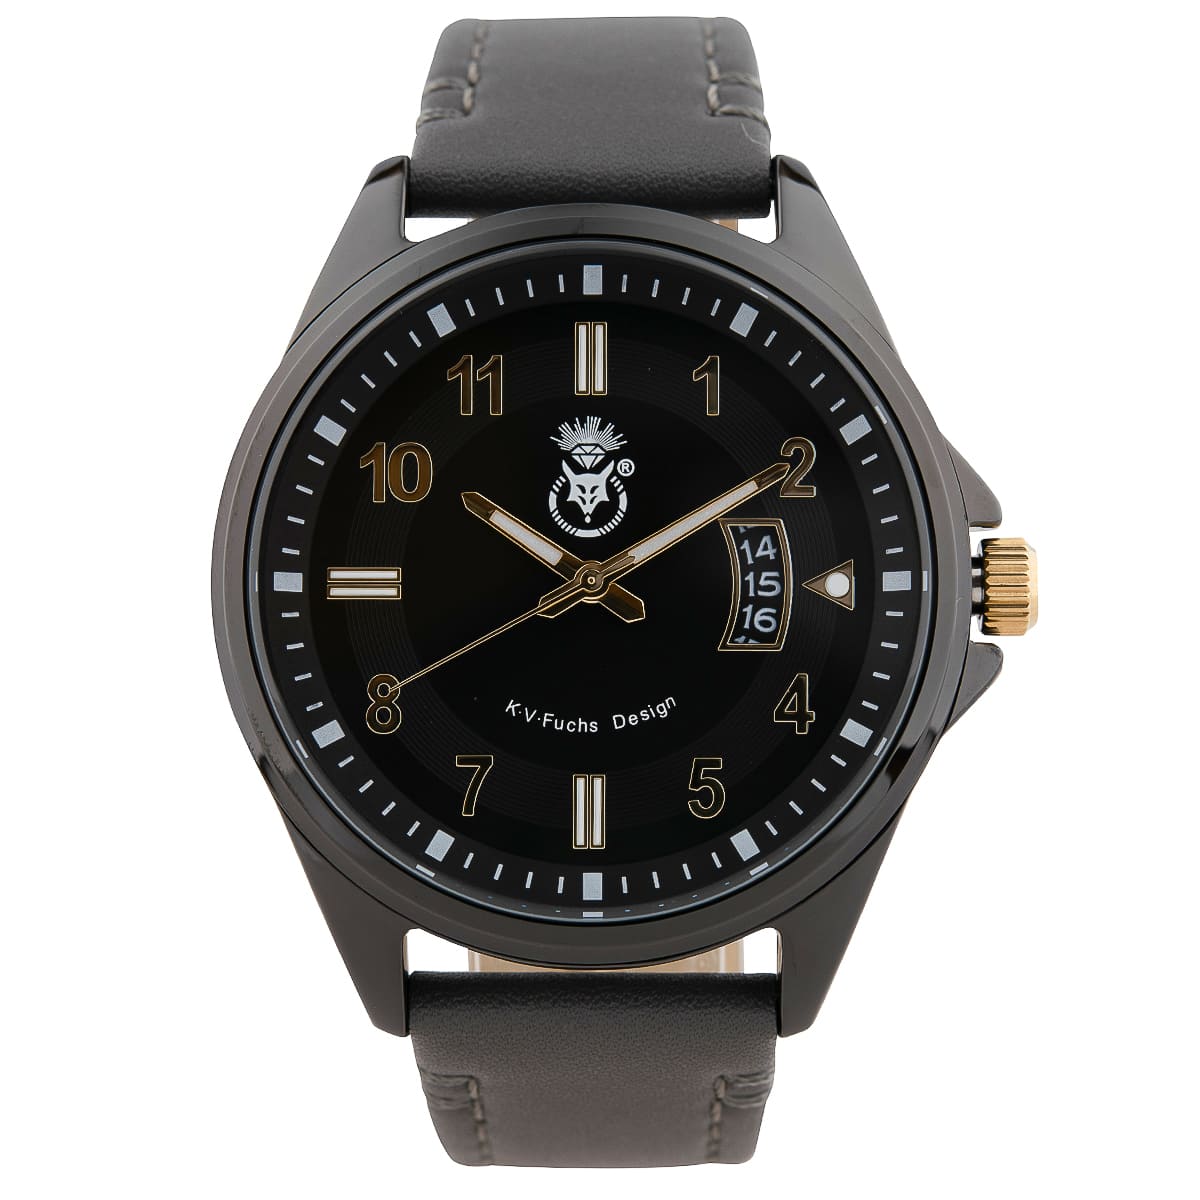 K.V. Fuchs Design Herren Quarzuhr analog Armbanduhr in schwarz mit Lederarmband in grau »U-69-06-Grau-Schwarz«